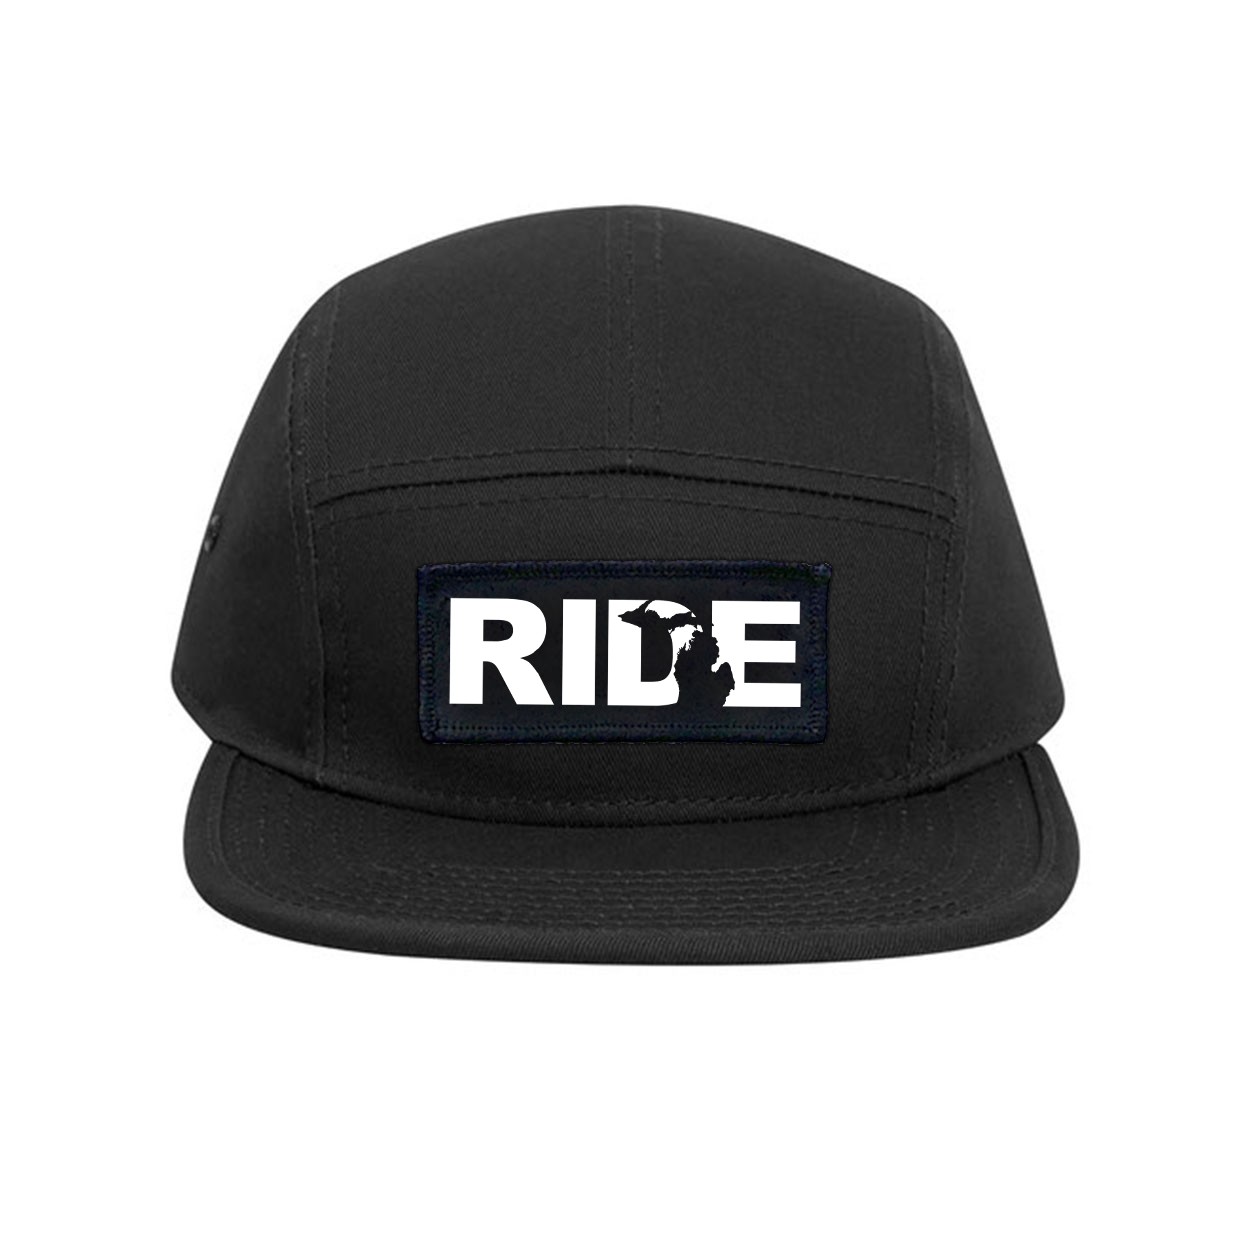 Ride Michigan Classic Embroidered Snapback Trucker Hat Black